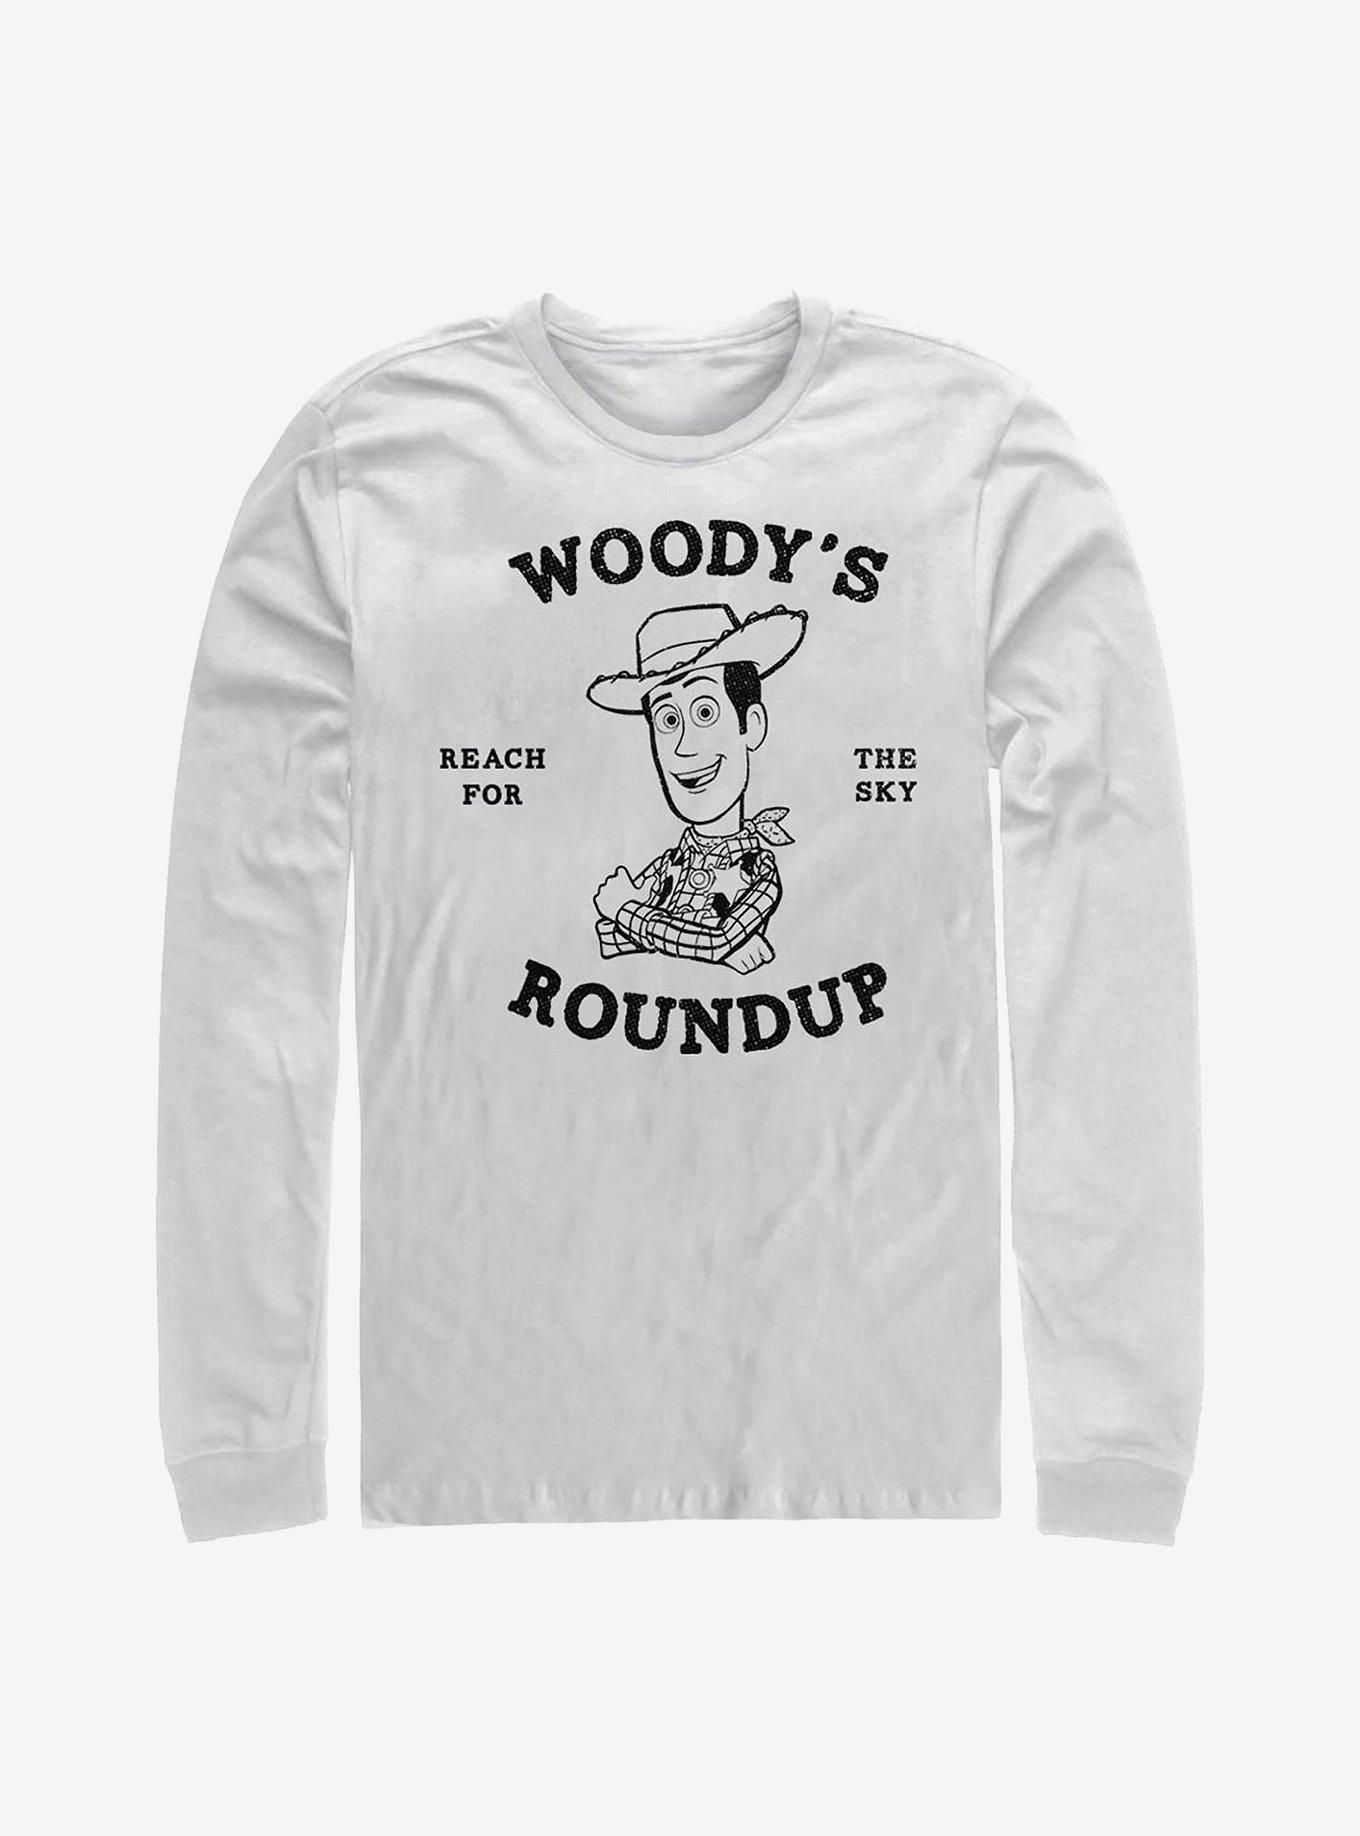 Disney Pixar Toy Story 4 Woody's Roundup Long-Sleeve T-Shirt, WHITE, hi-res